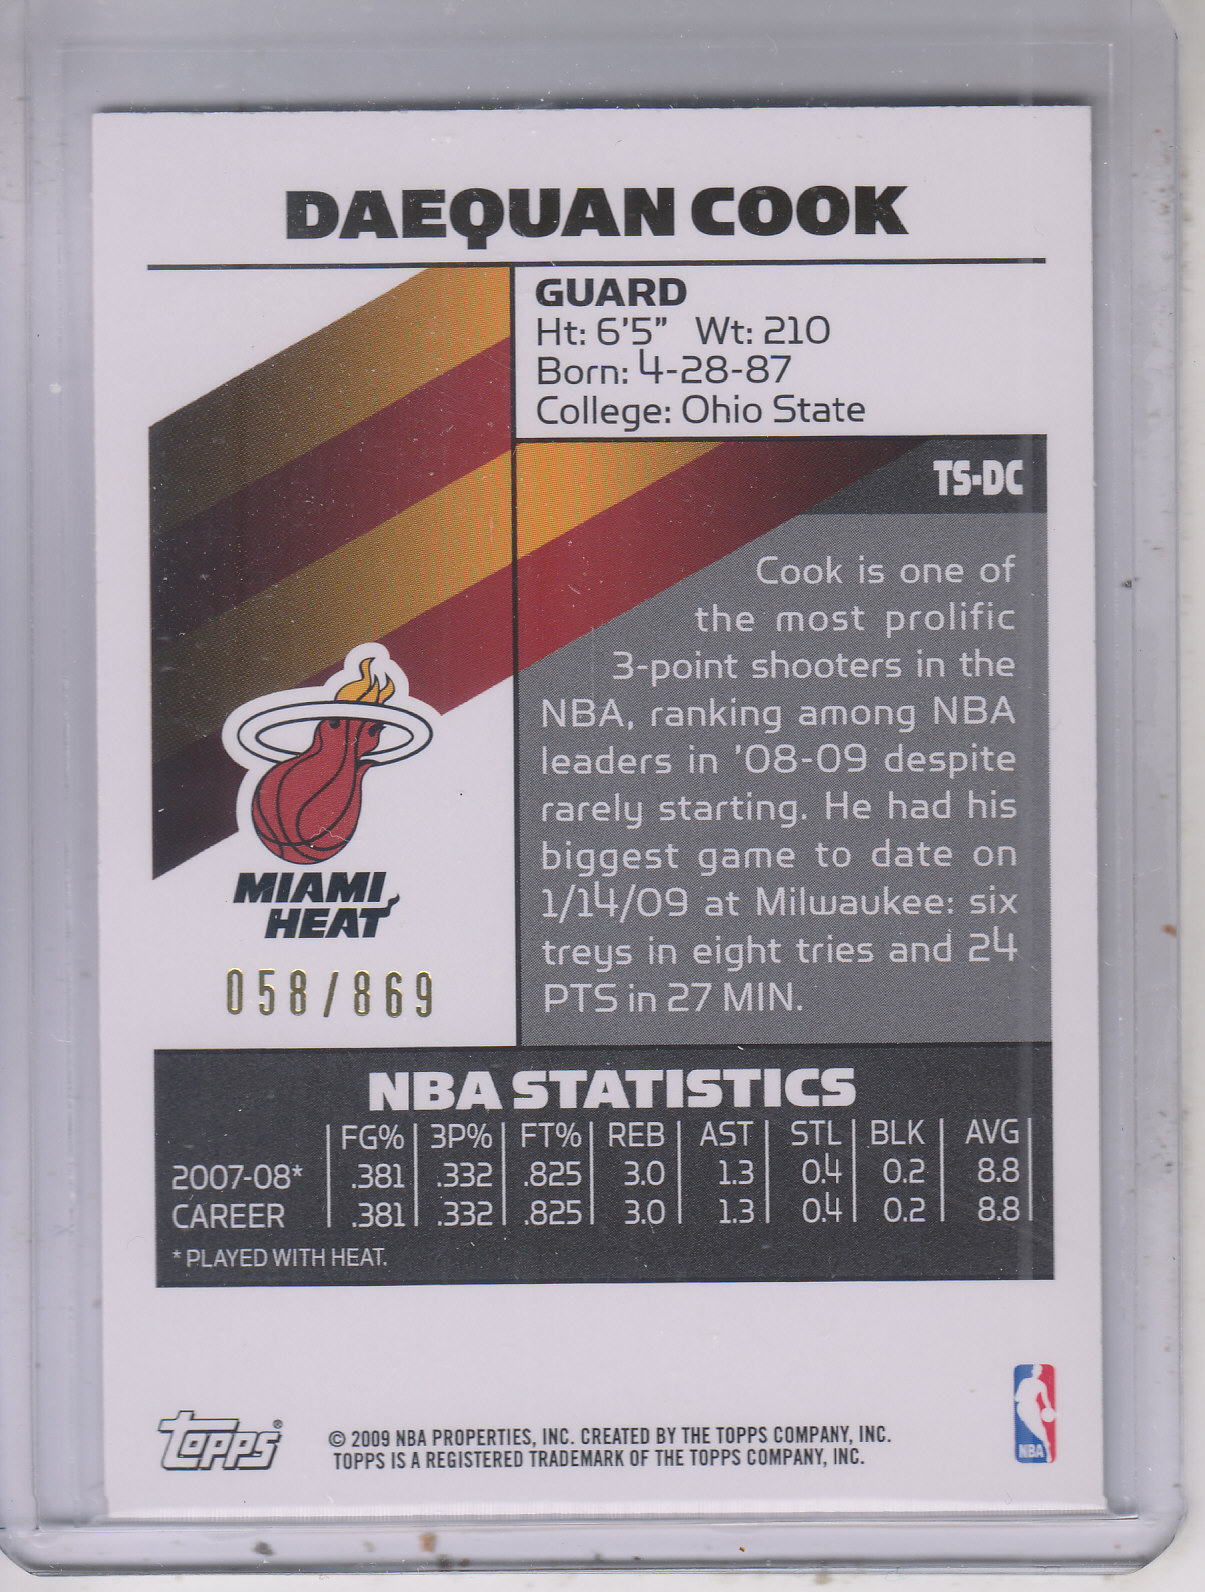 2008-09 Topps Signature Facsimile Red #TSDC Daequan Cook back image